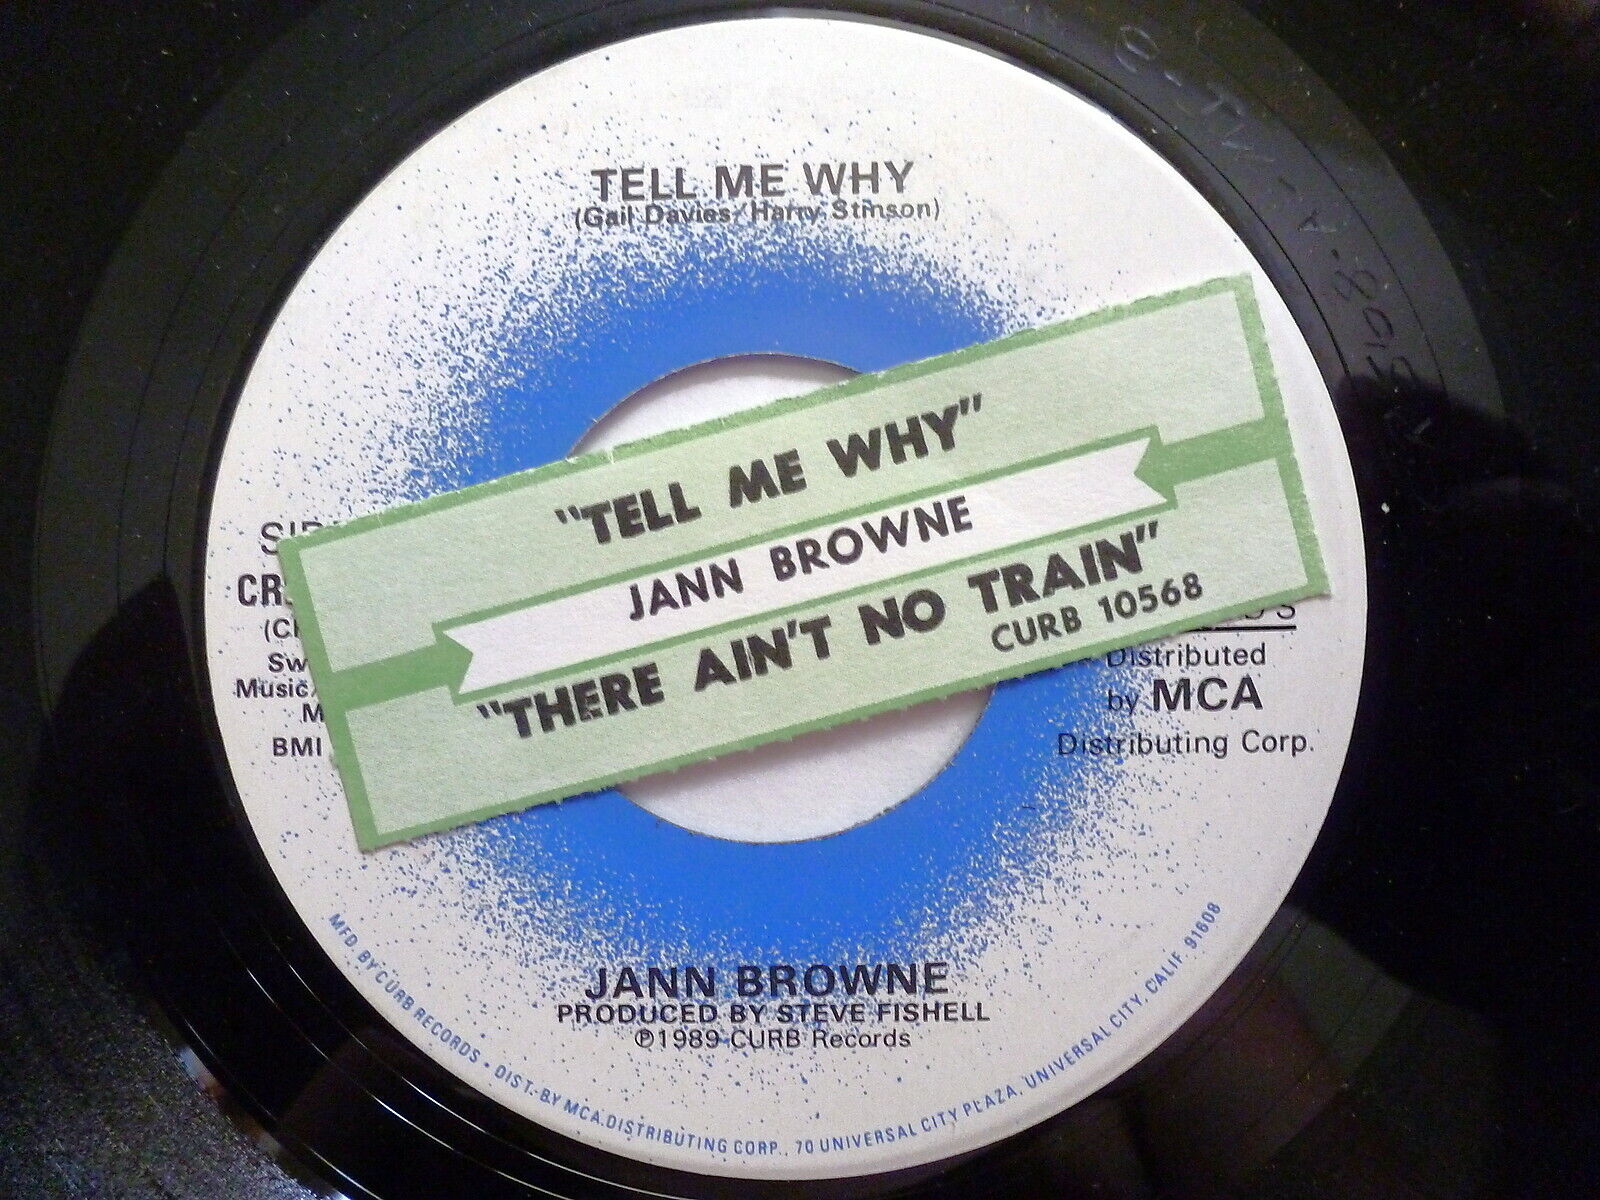 JANN BROWNE 45 RPM 7" VINYL - Tell Me Why